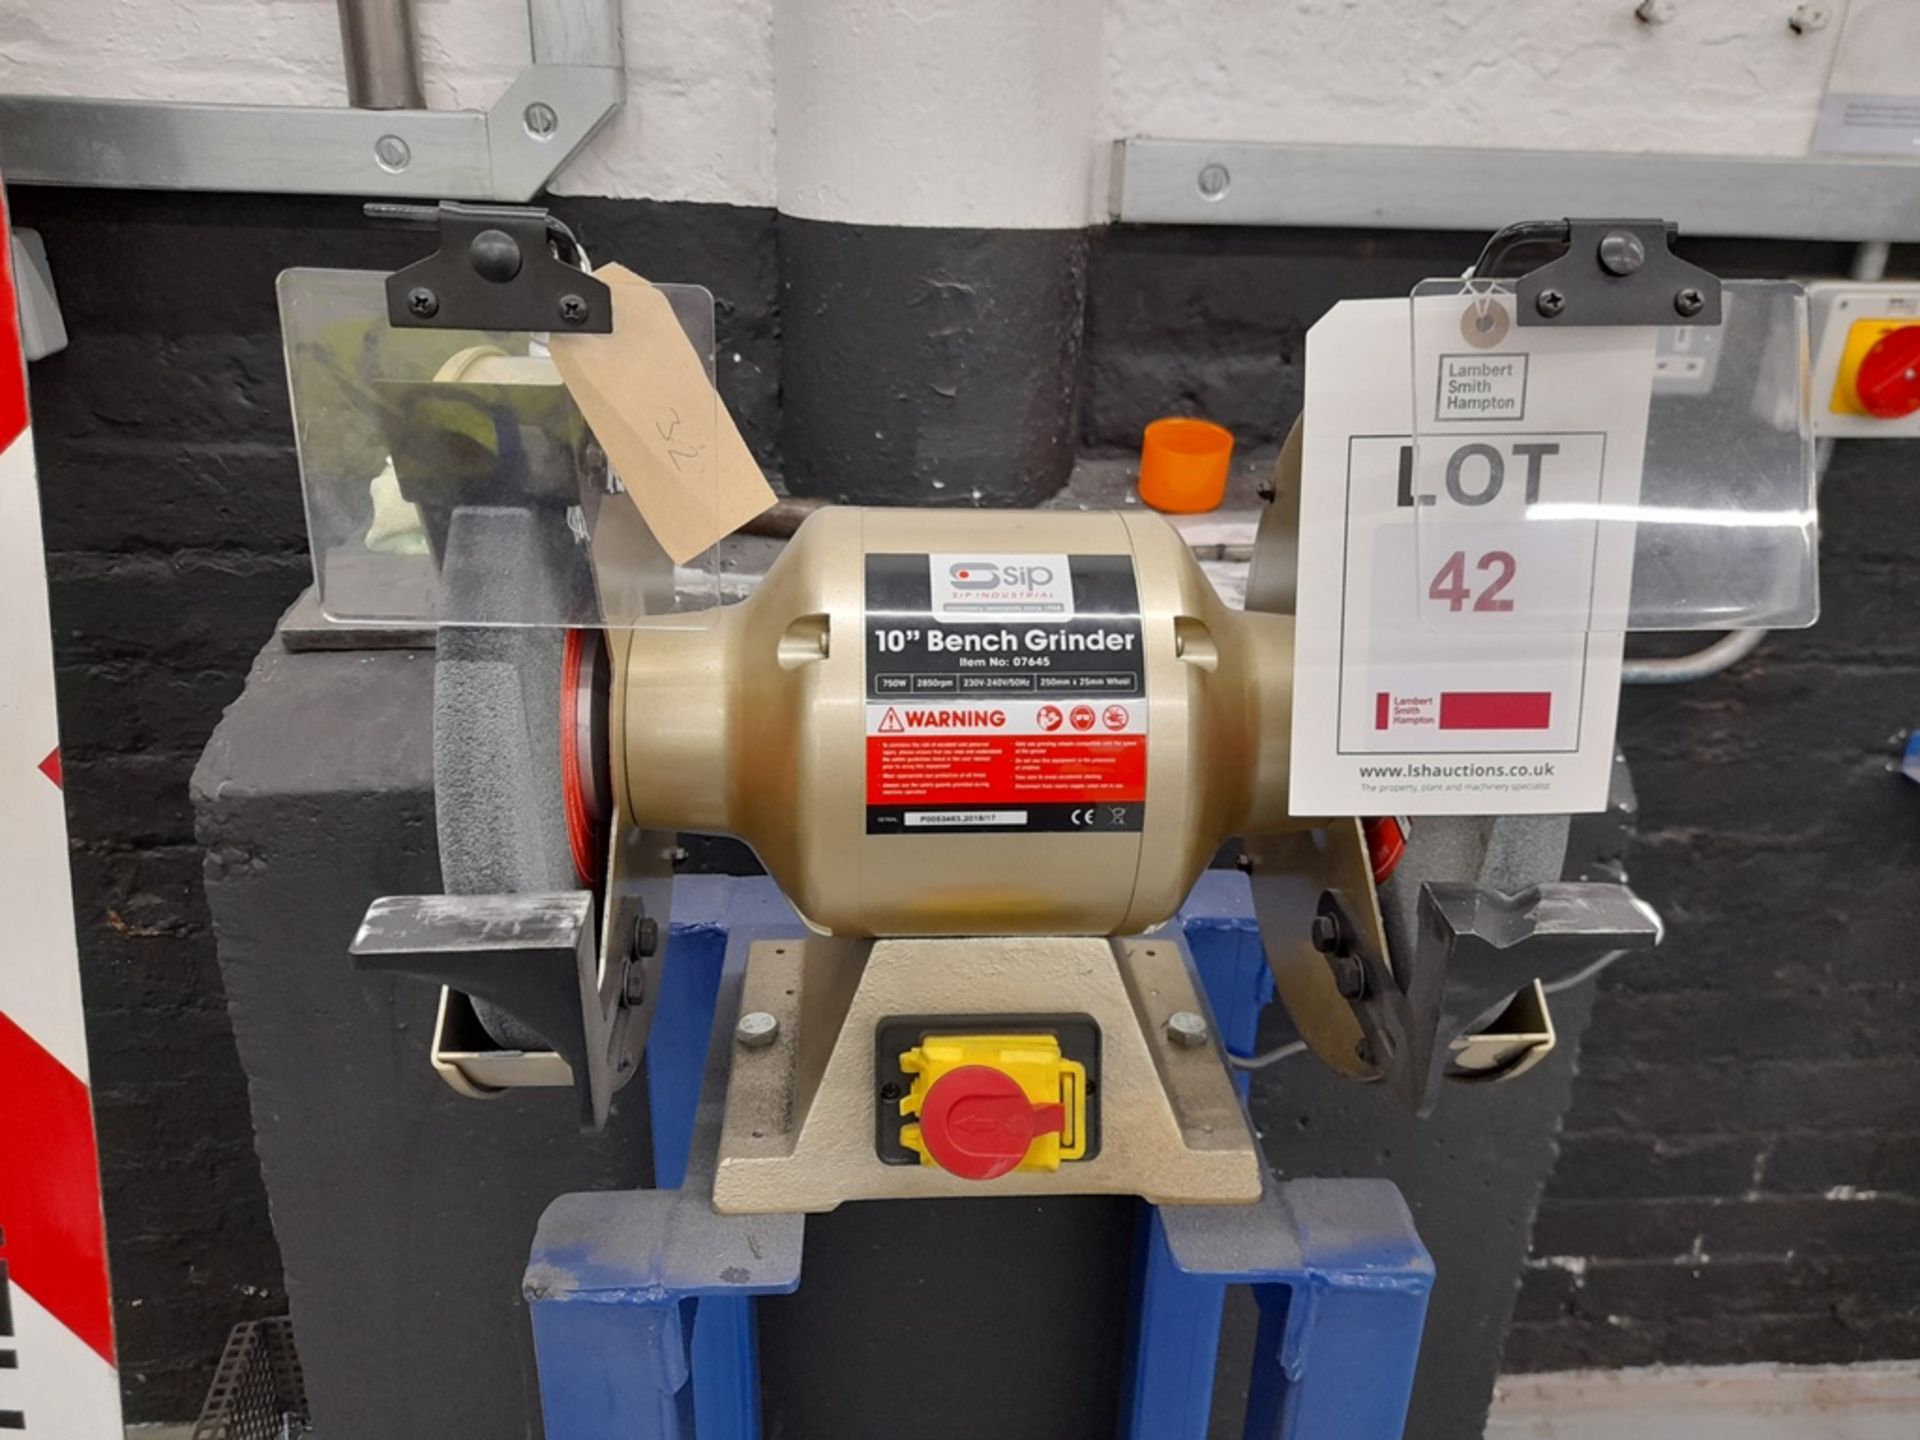 SIP Industrial 10" bench grinder, 250mm x 25mm wheel (1), Item no. 07645, Year 2018/17, Serial no. - Image 2 of 2